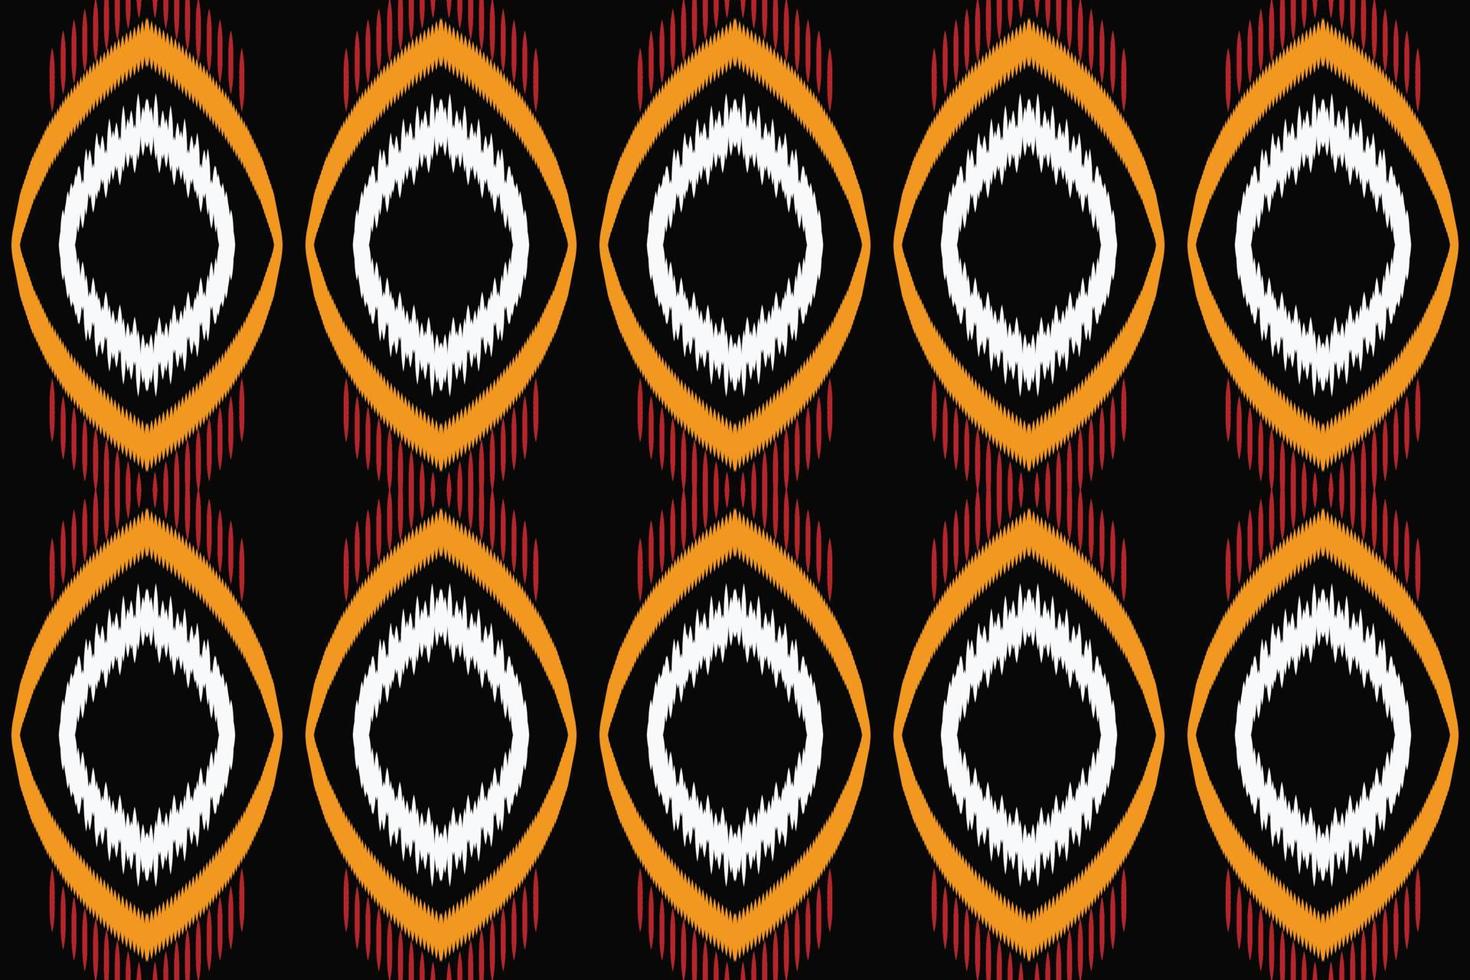 ikat damasco tribal africano borneo escandinavo batik bohemio textura vector digital diseño para imprimir saree kurti tela cepillo símbolos muestras